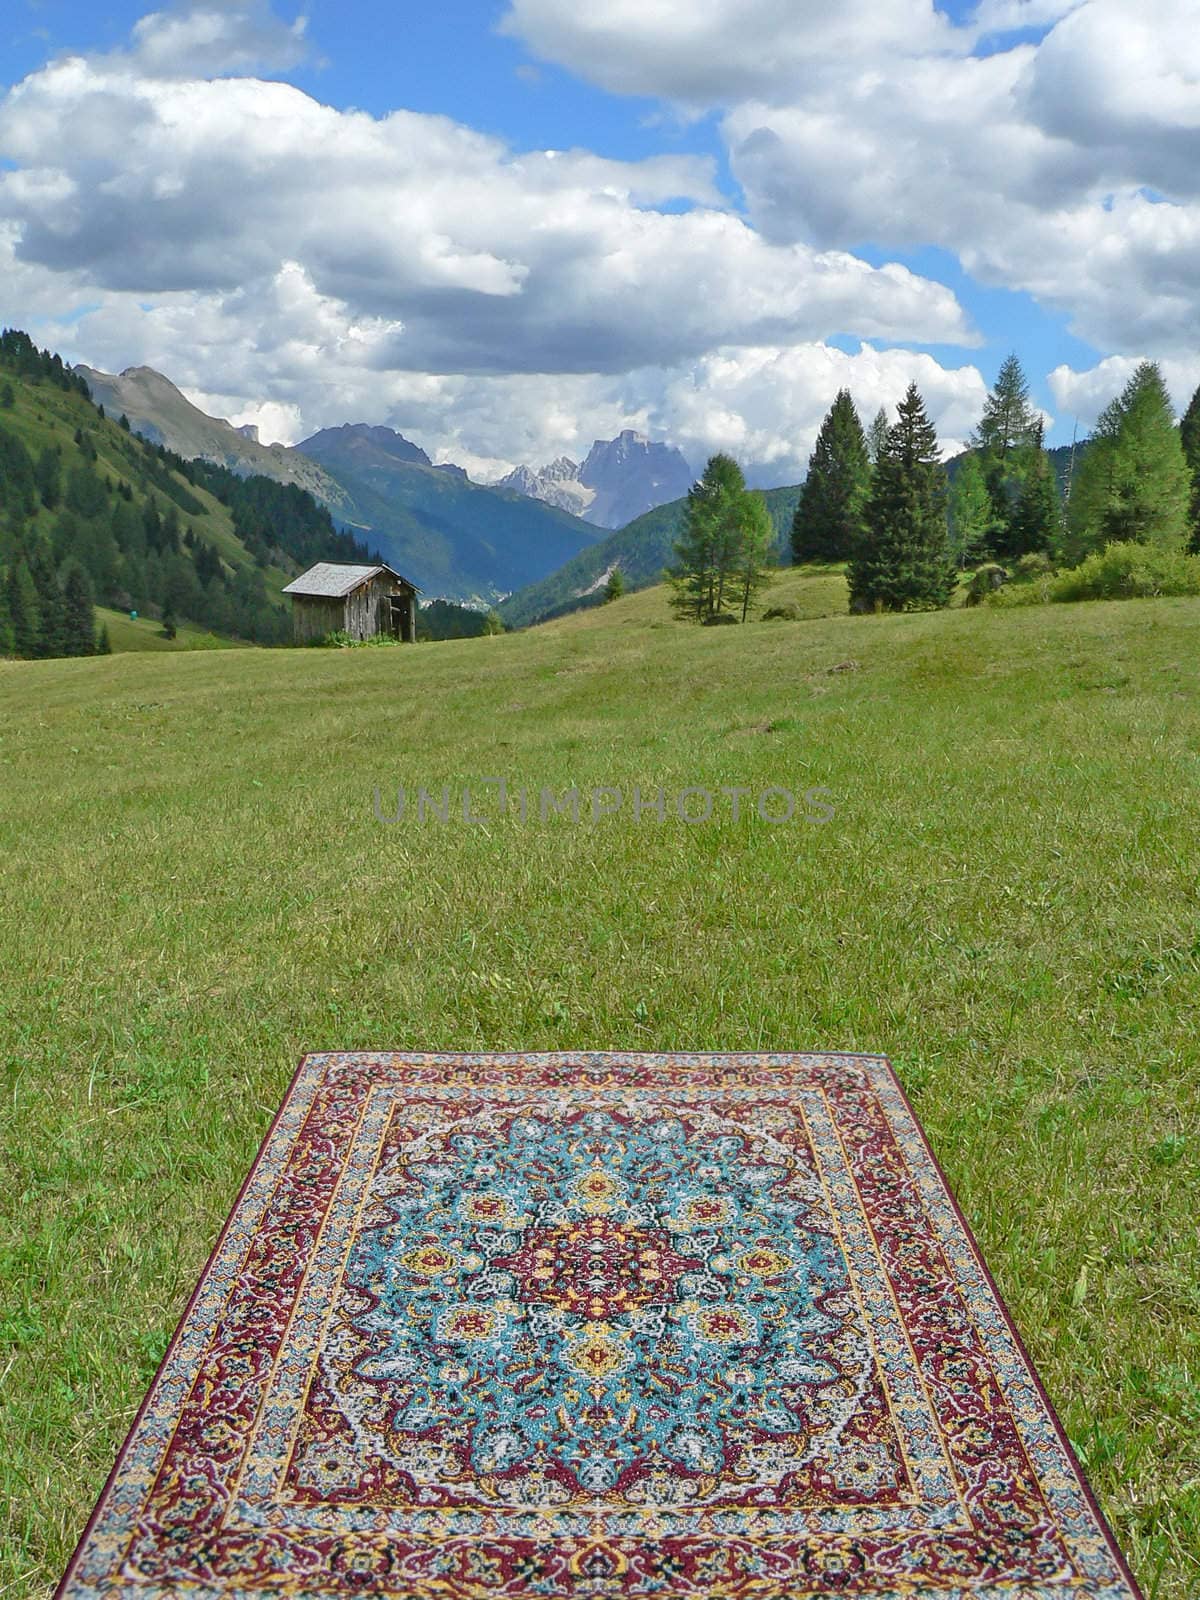 mountain landscape with carpet